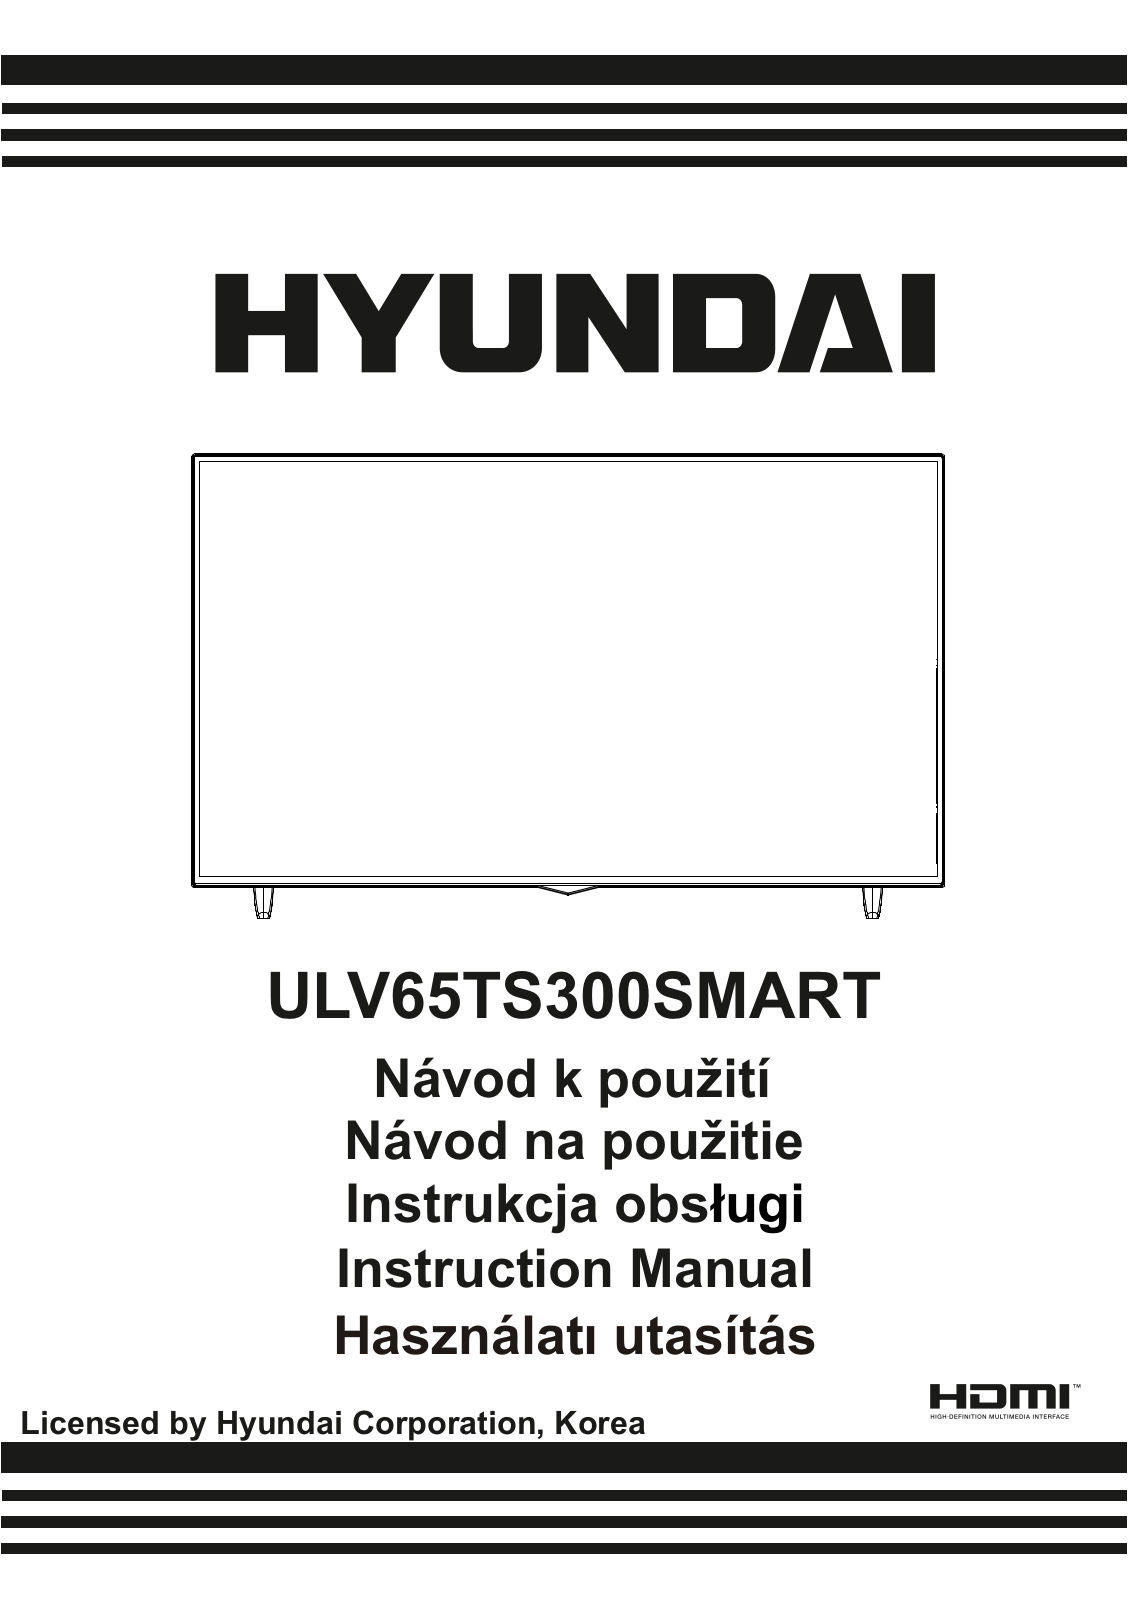 Hyundai ULV 65TS300 SMART User Manual